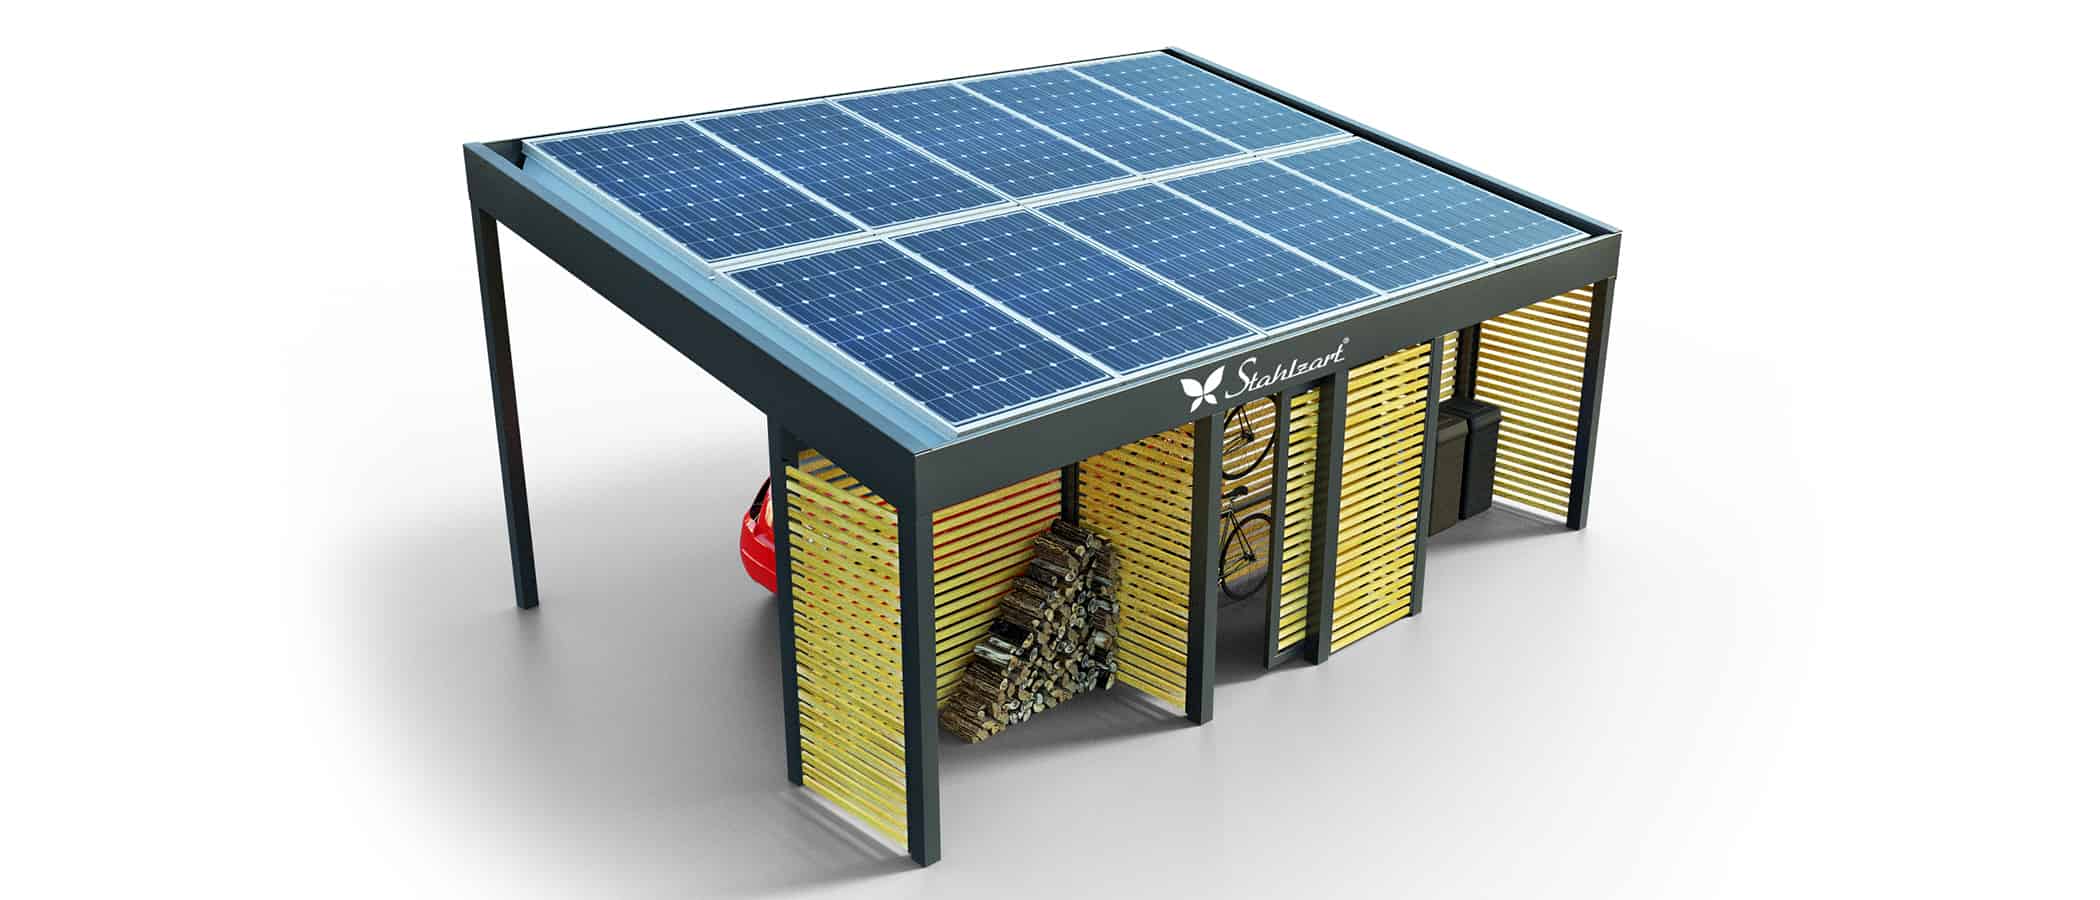 solar-carport-mit-schraegdach-solar-carports-e-fahrzeuge-pv-anlage-solarcarport-strom-solaranalge-e-auto-doppelcarport-holz-metall-mit-abstellraum-brennholz-fahrrad-muelltonnen-modern-stahlzart